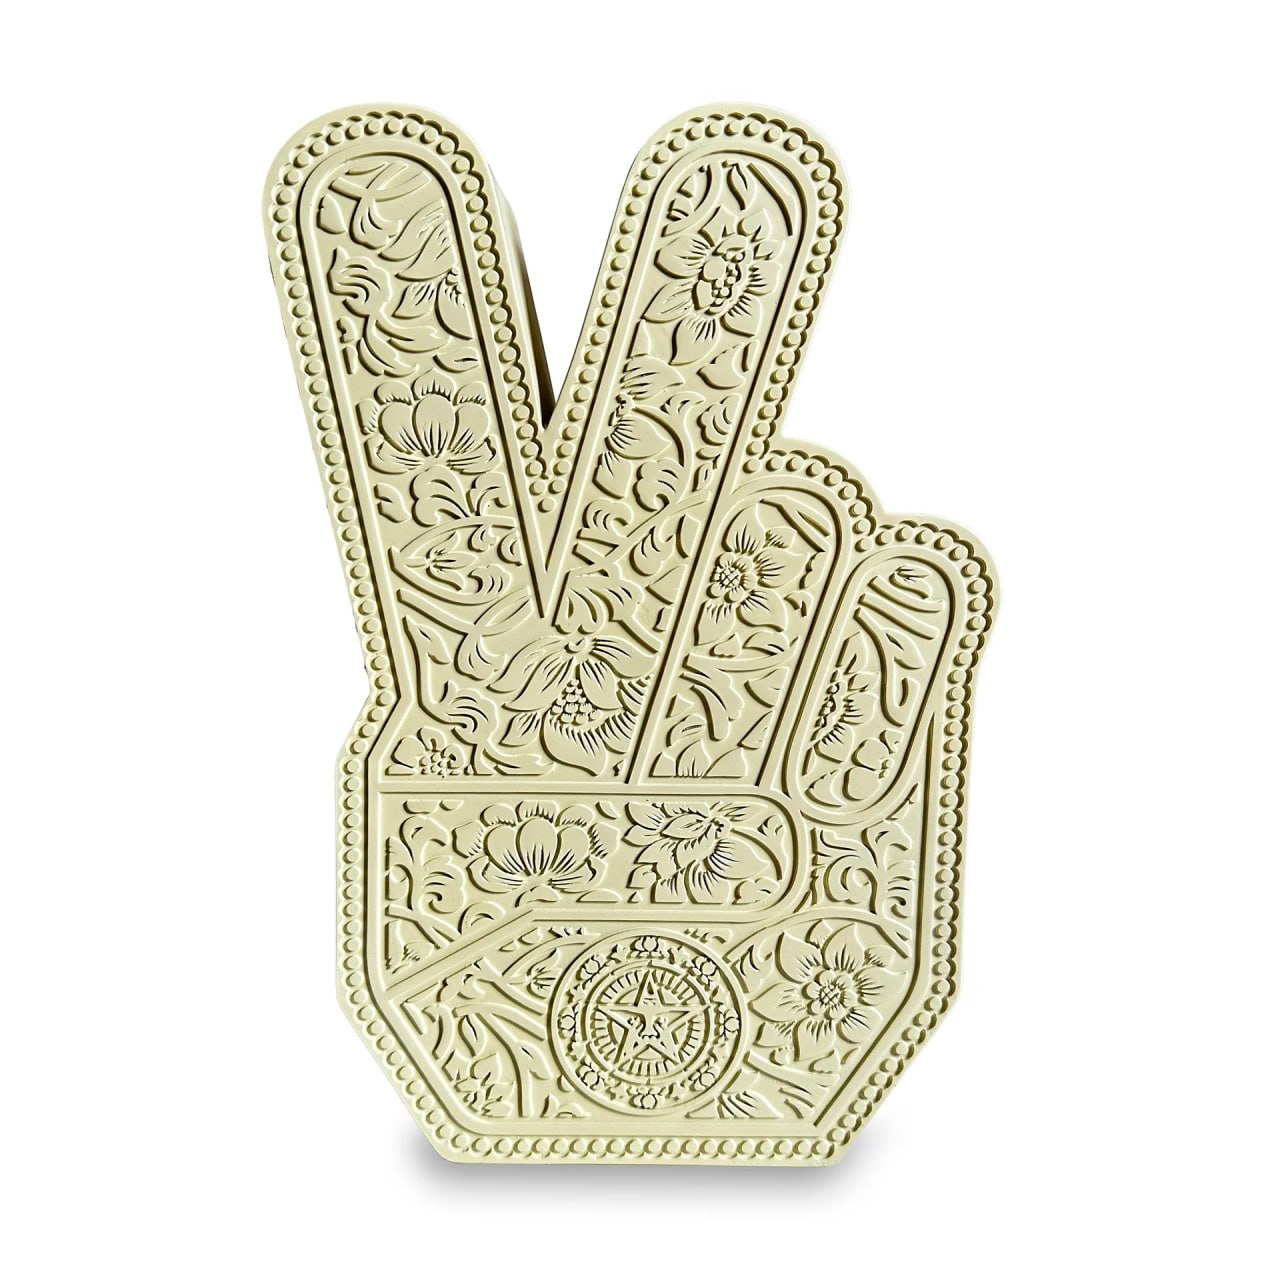 OBEY (Shepard Fairey) - Peace Fingers sculpture